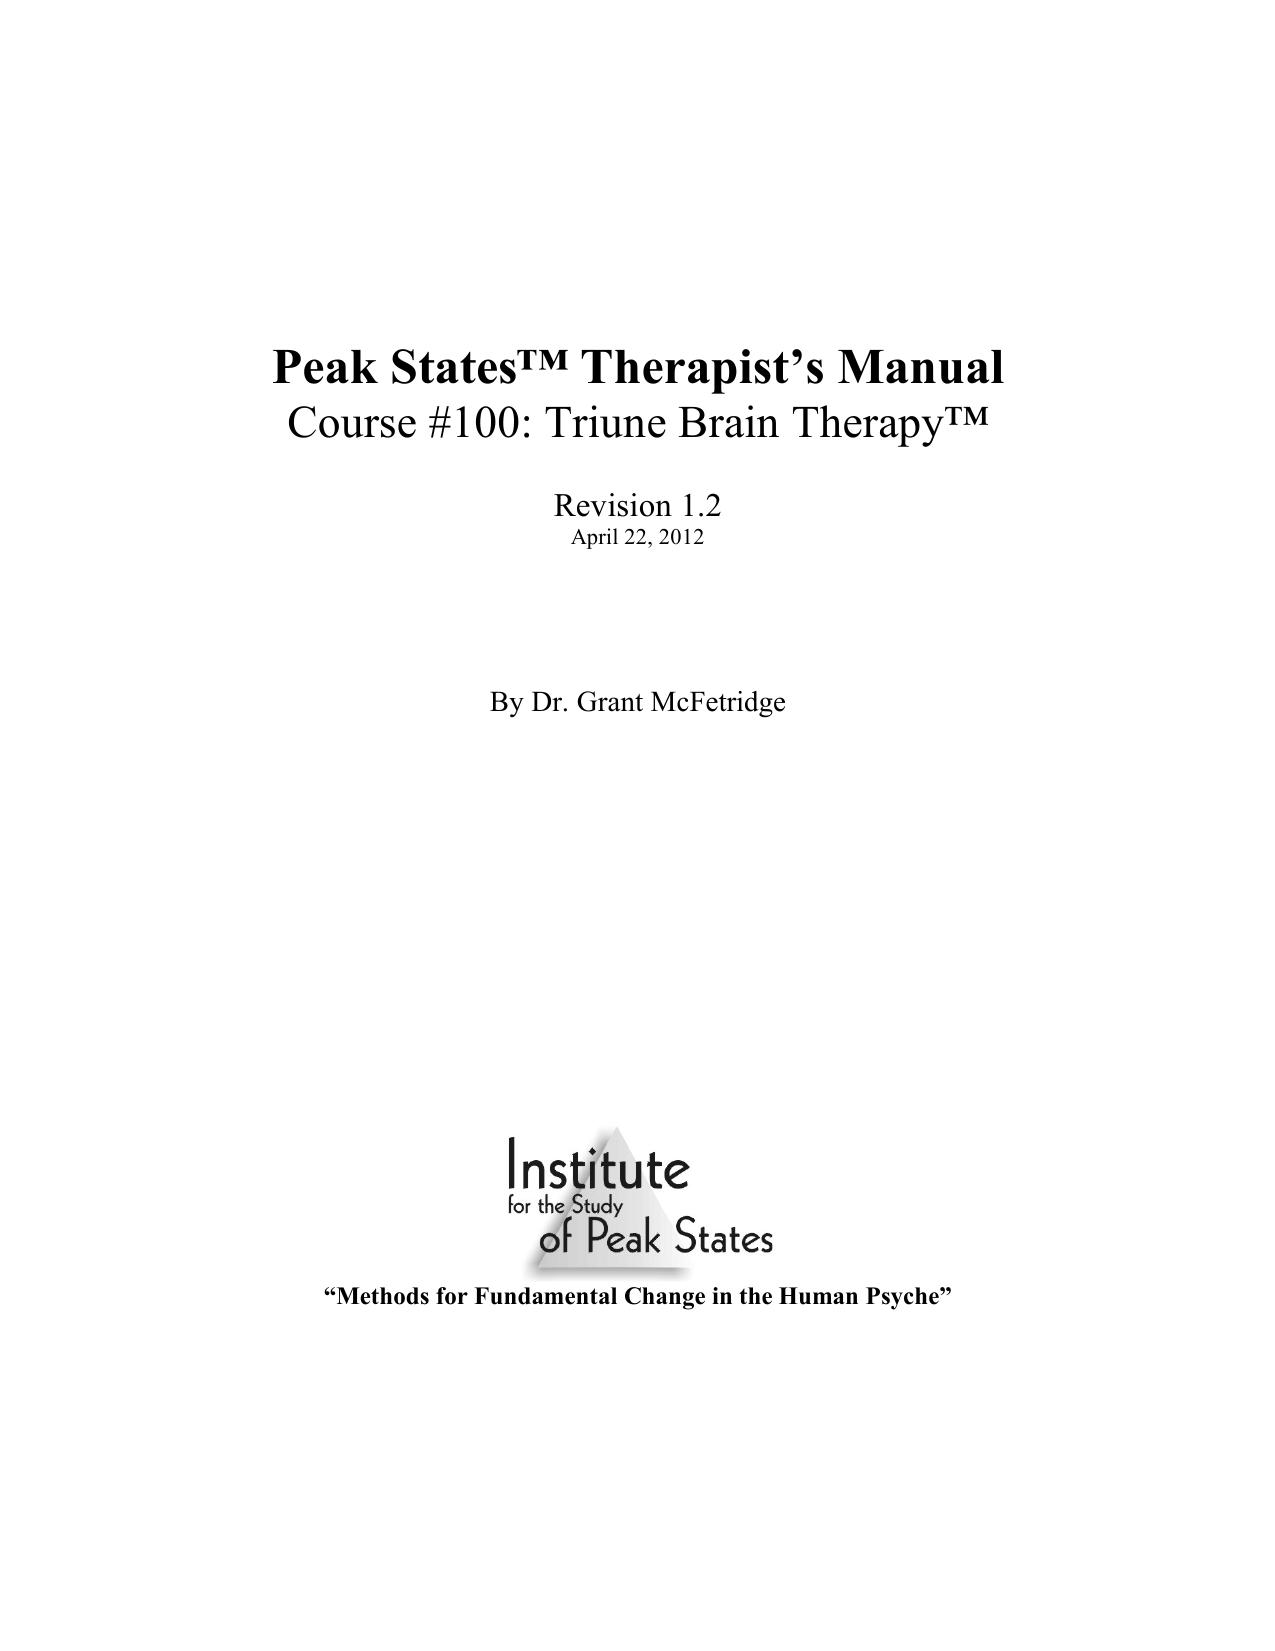 eak States Therapist’s Manual: Triune Brain Therapy, rev 1.2